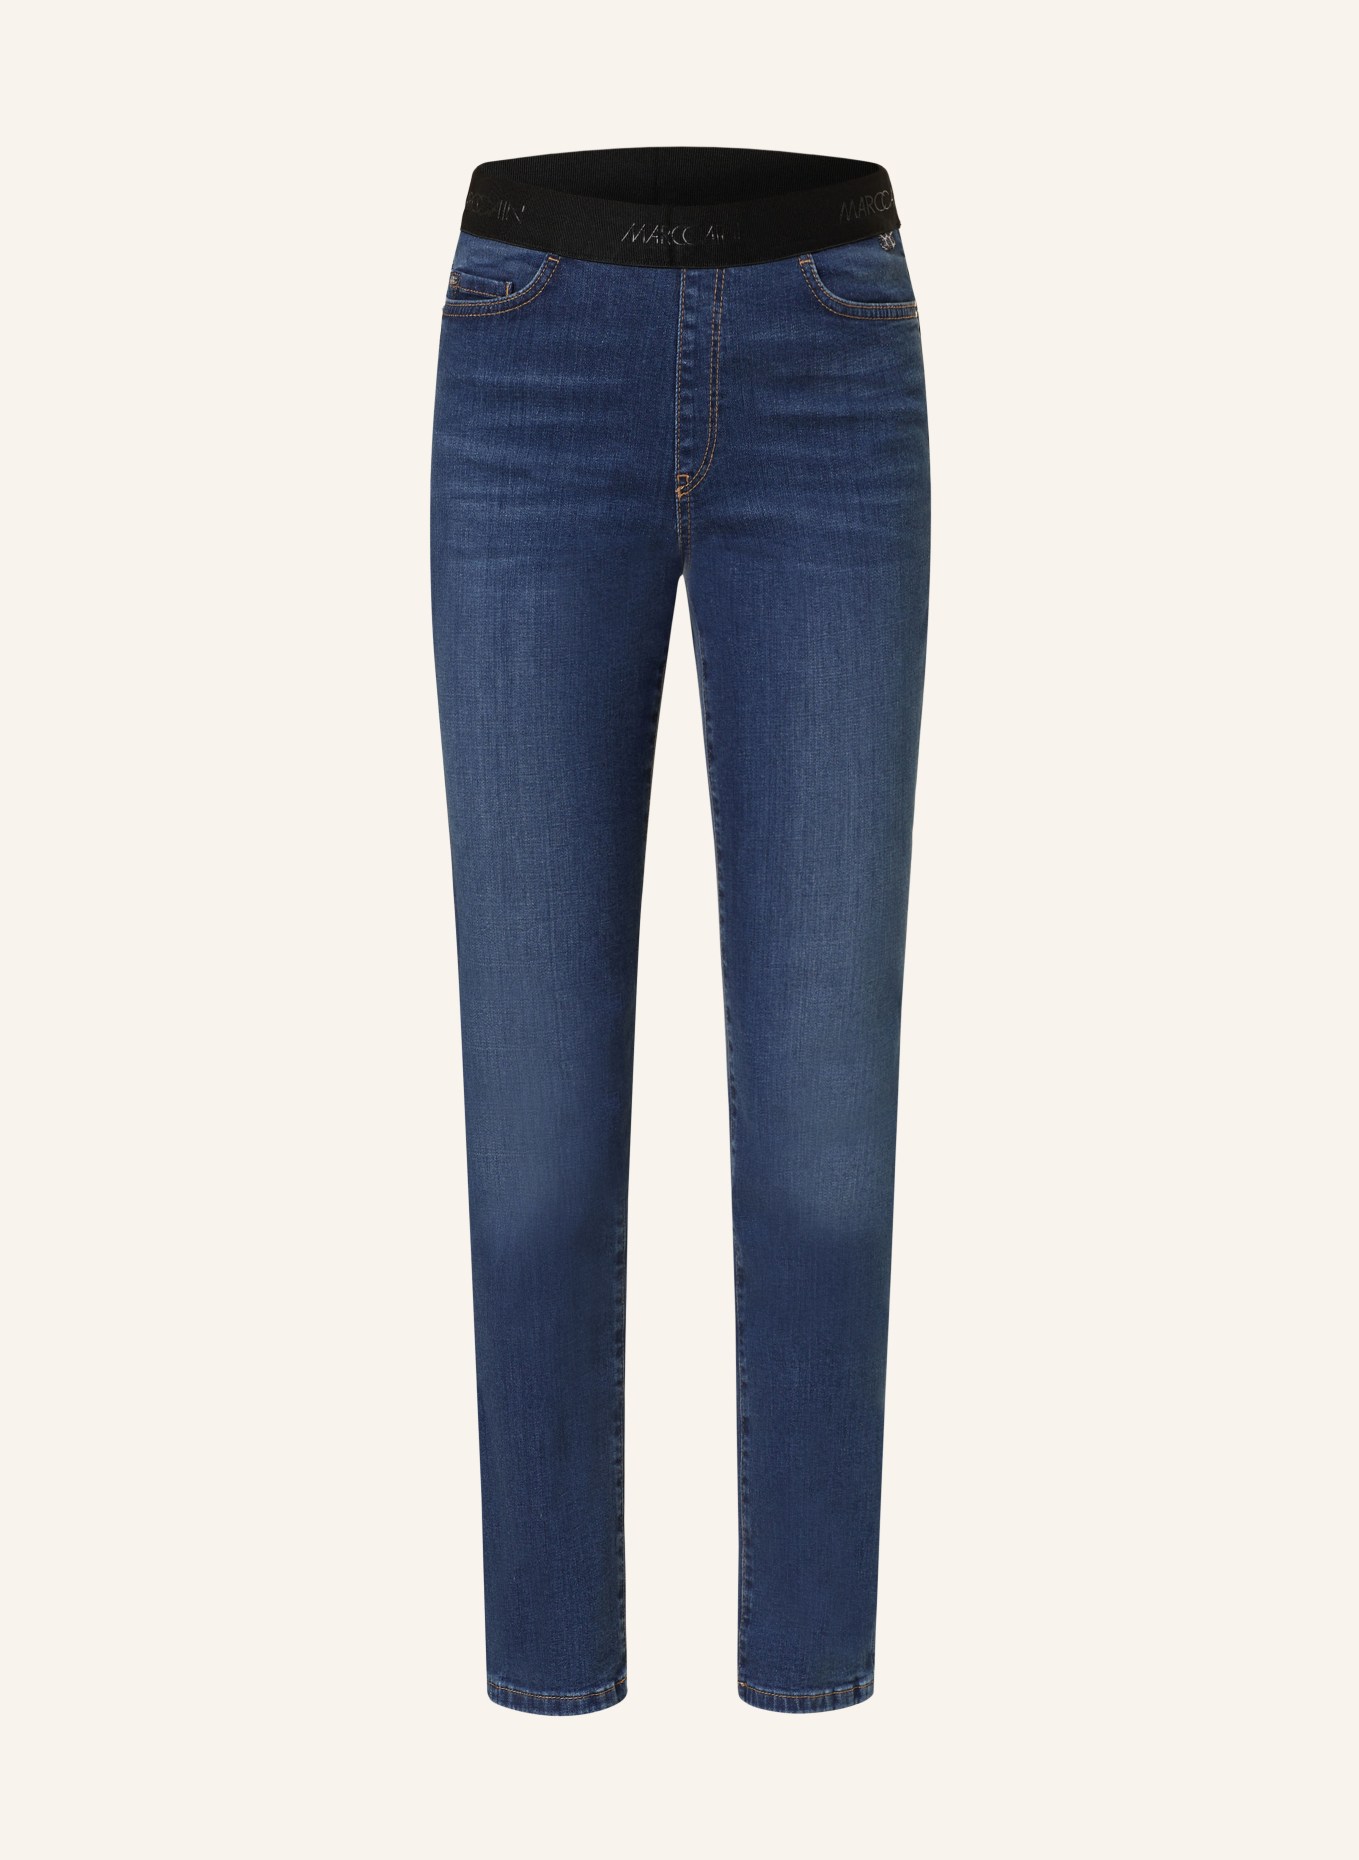 MARC CAIN Skinny Jeans, Farbe: 353 blue denim (Bild 1)